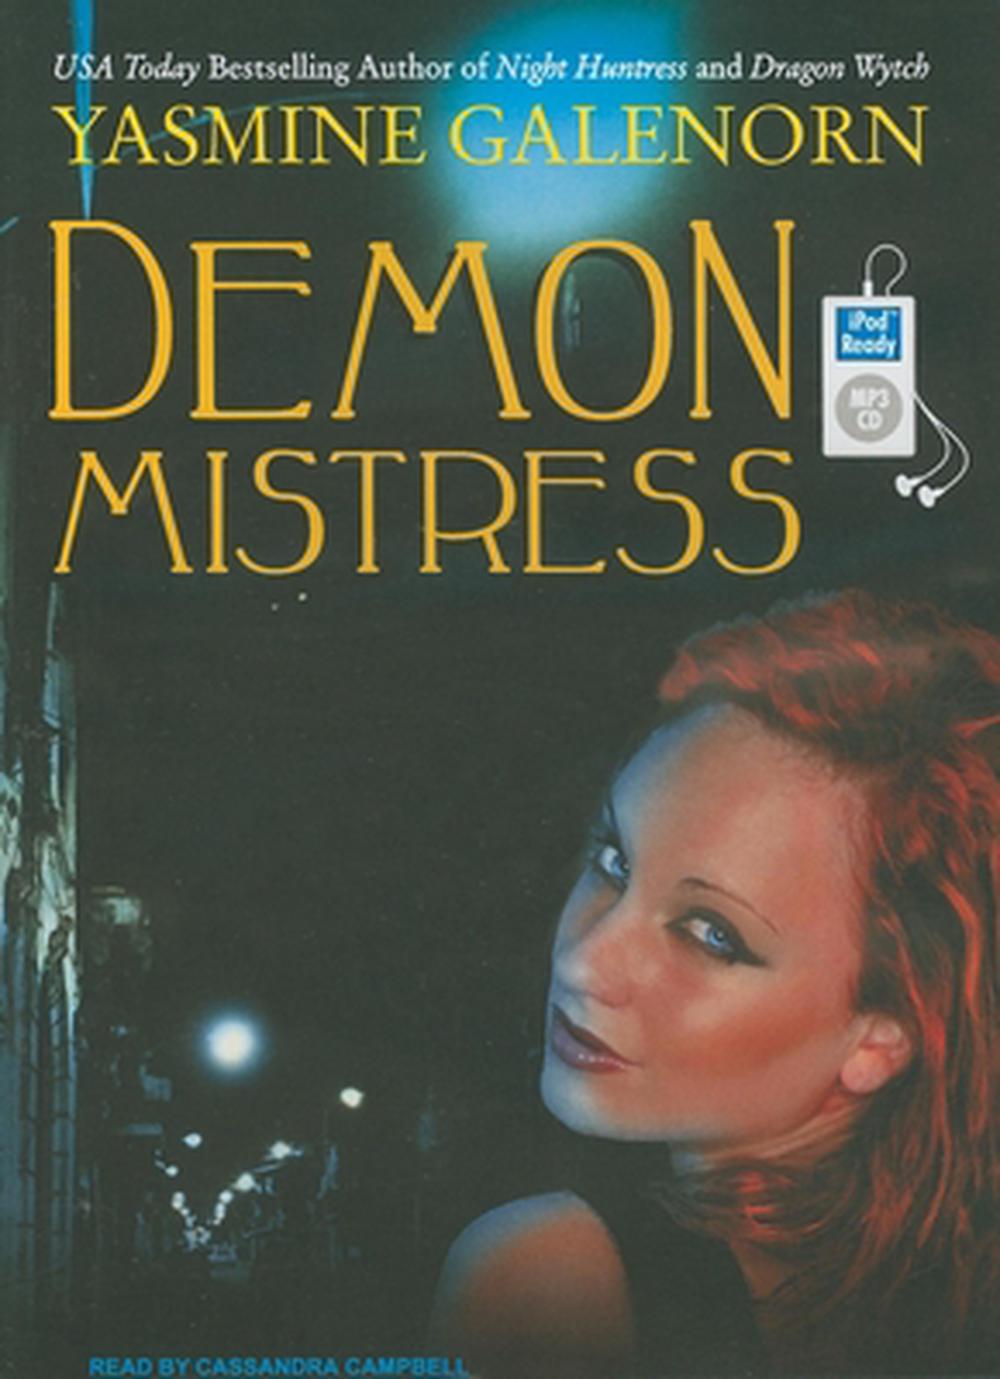 Demon Mistress by Yasmine Galenorn